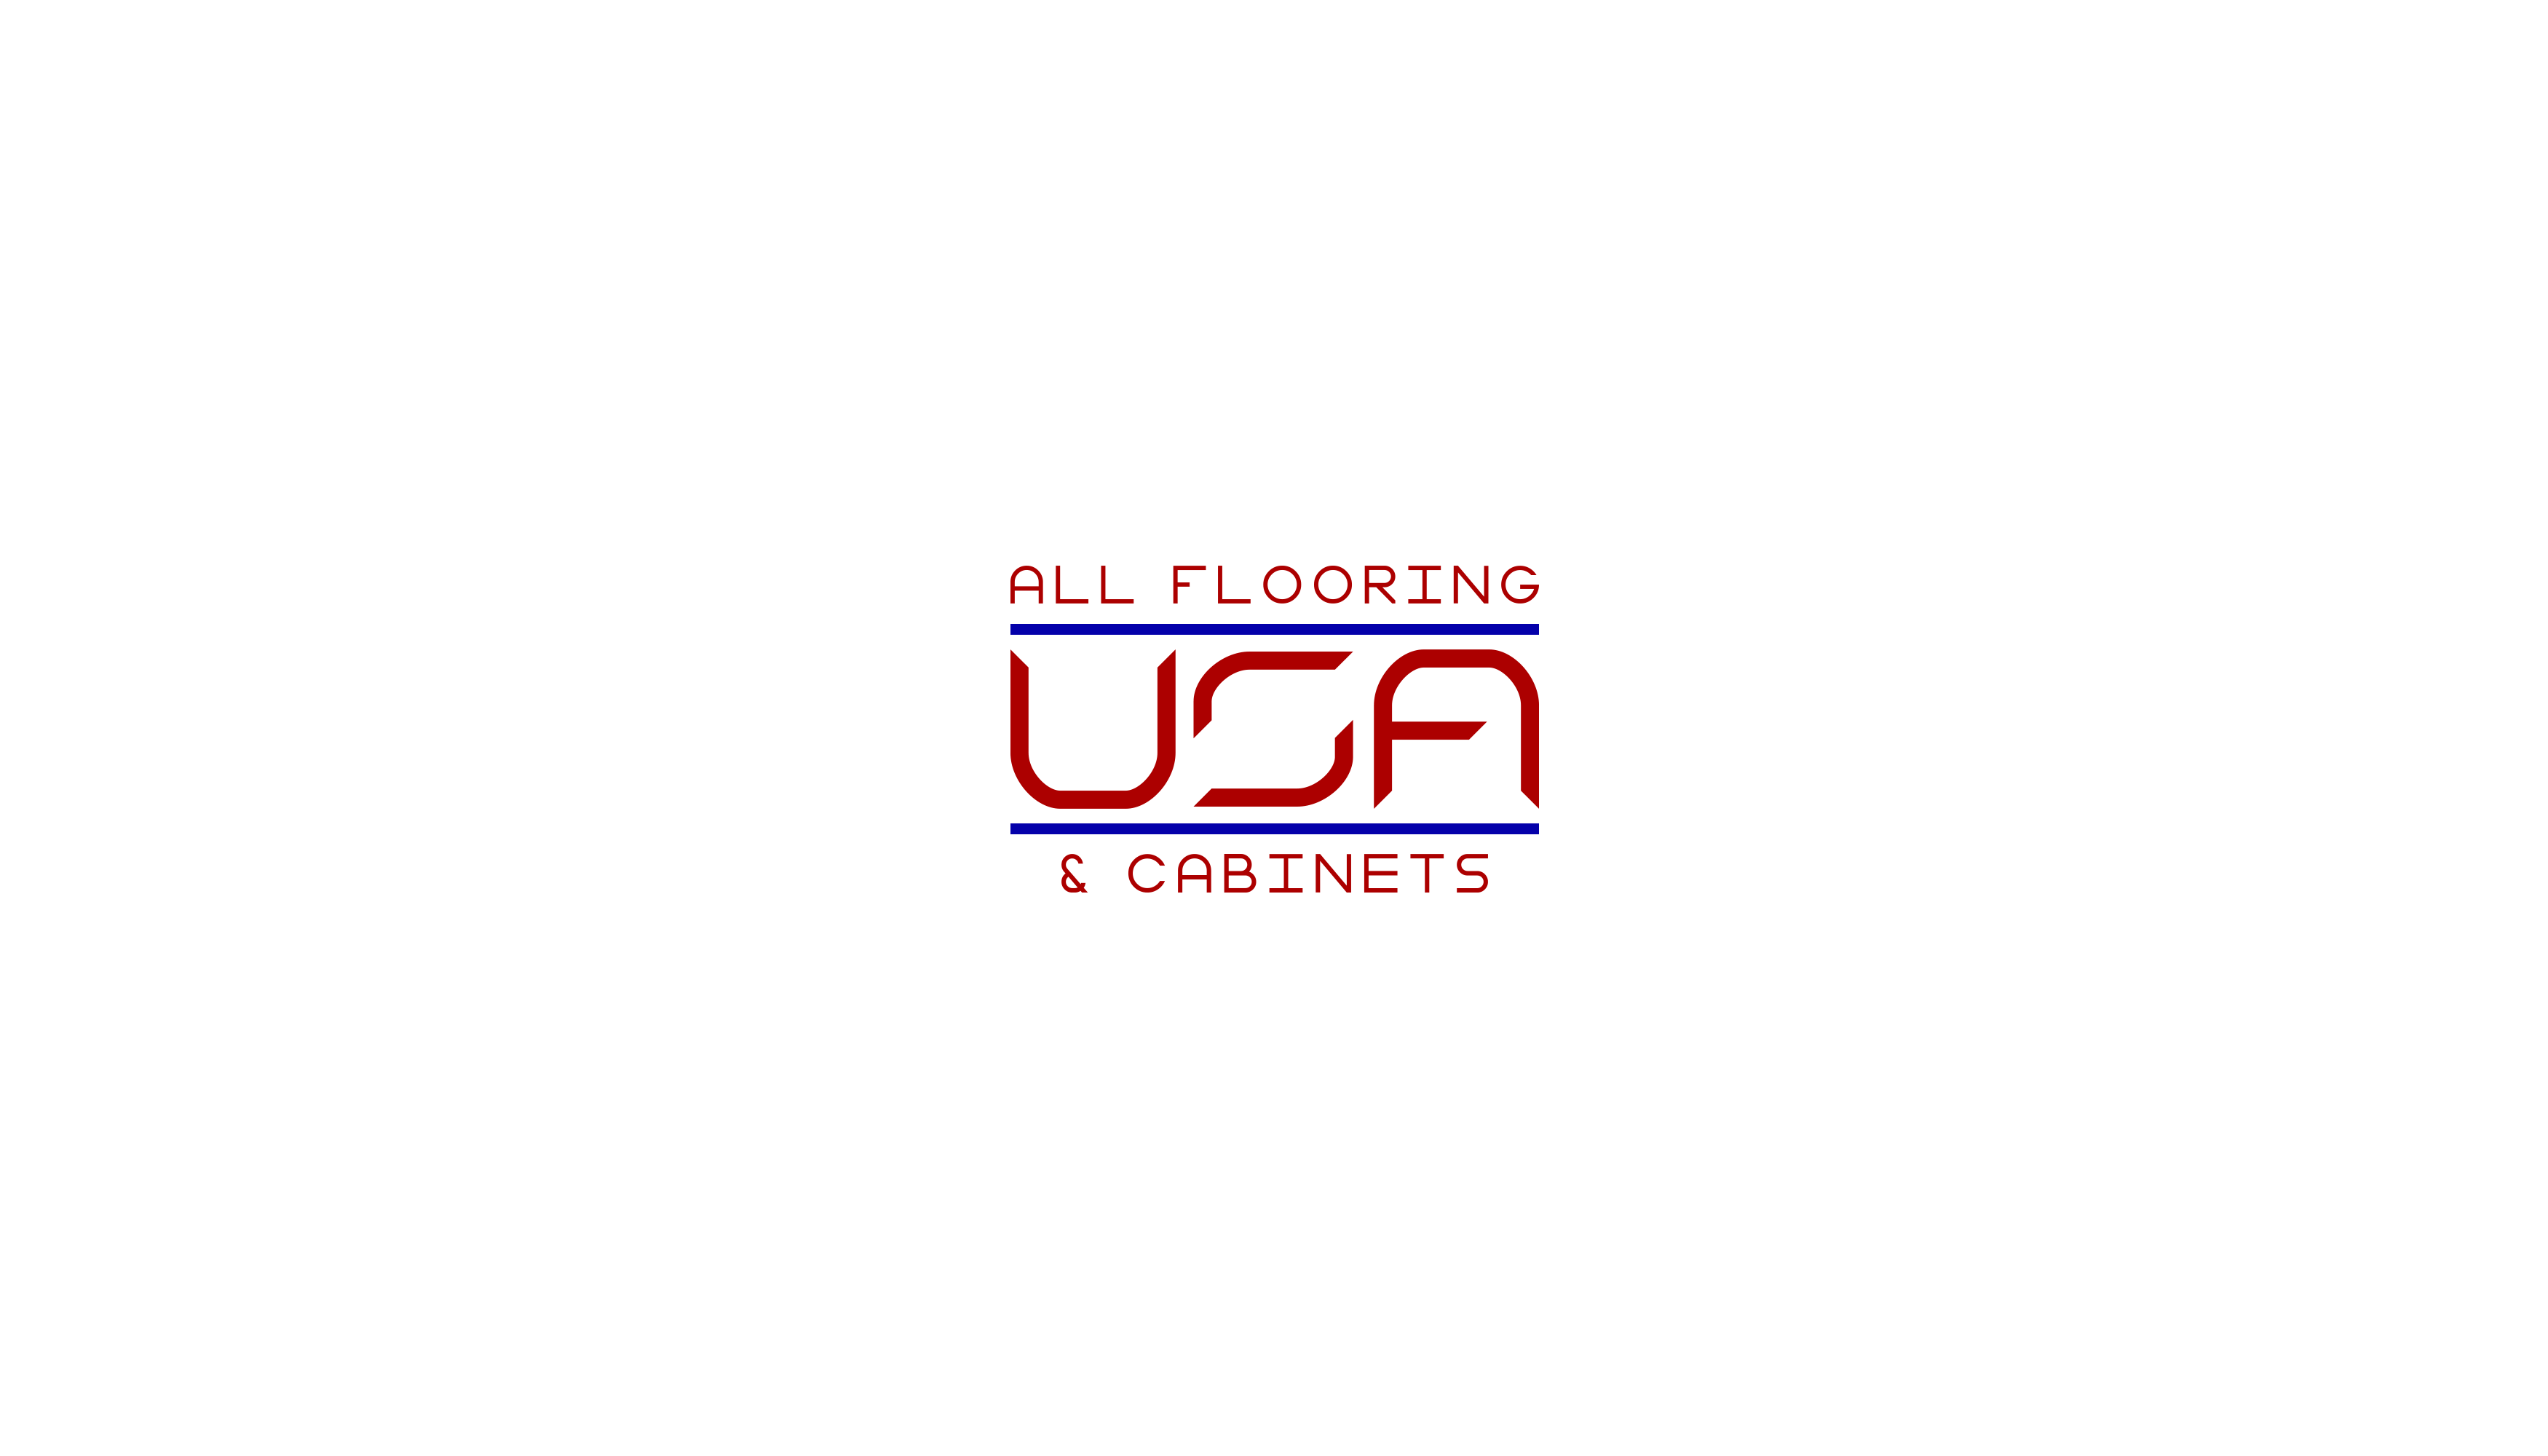 All Flooring USA & Cabinets Design #7